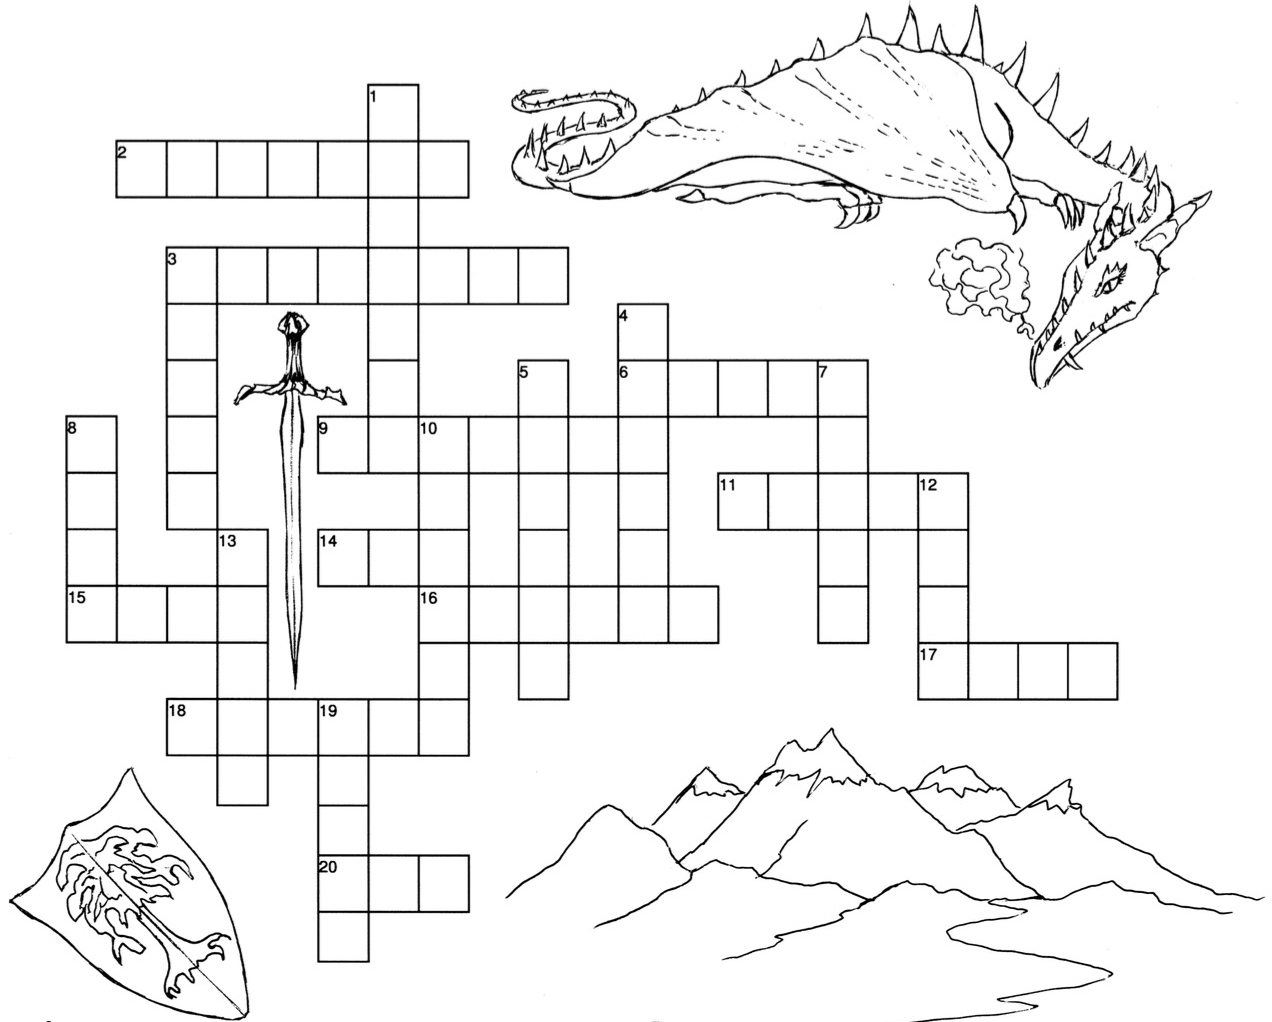 Eragon Crossword Image